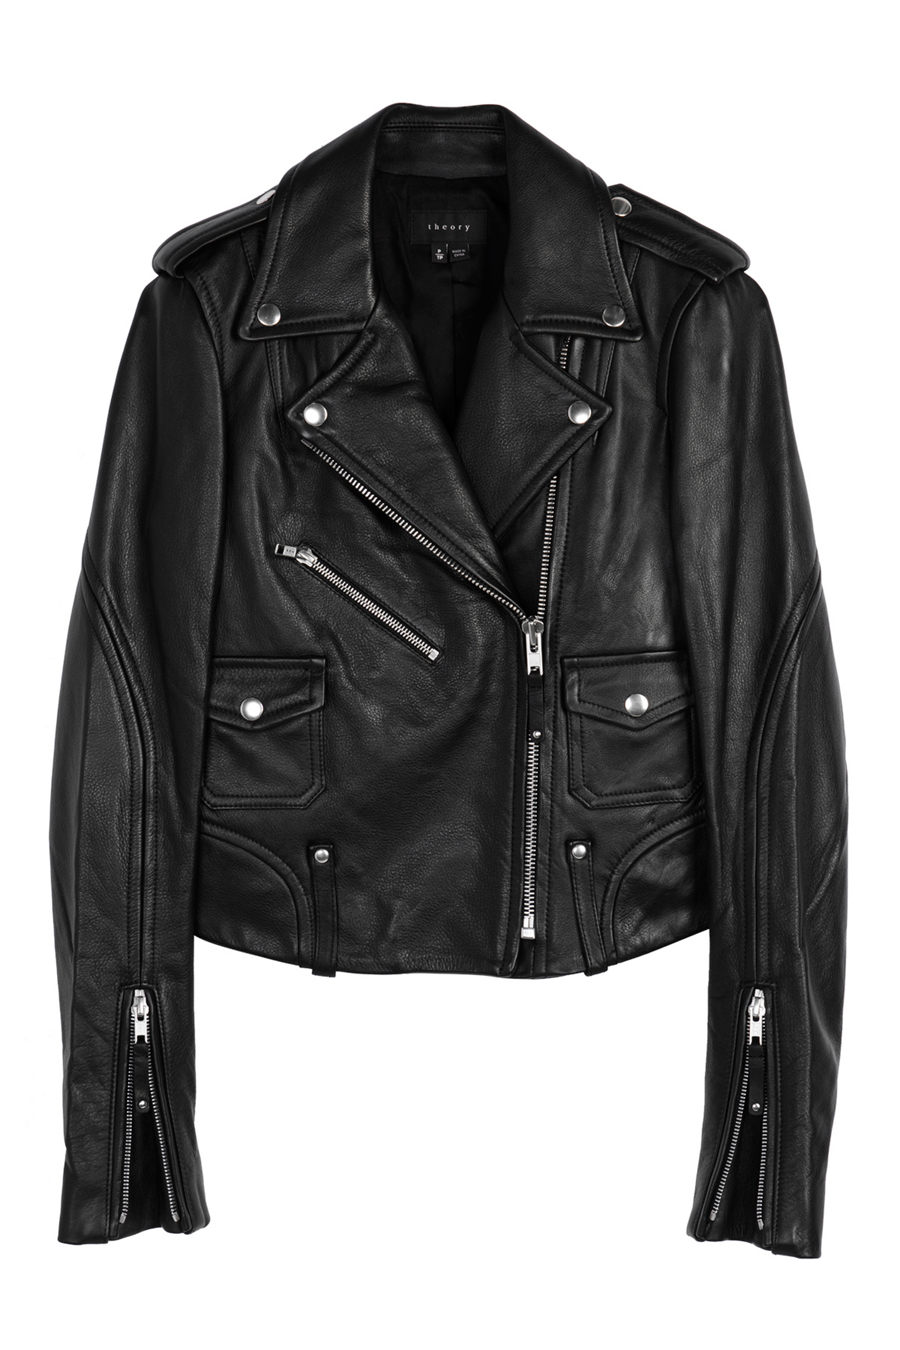 Moto jackets for women 2013 - Chatelaine